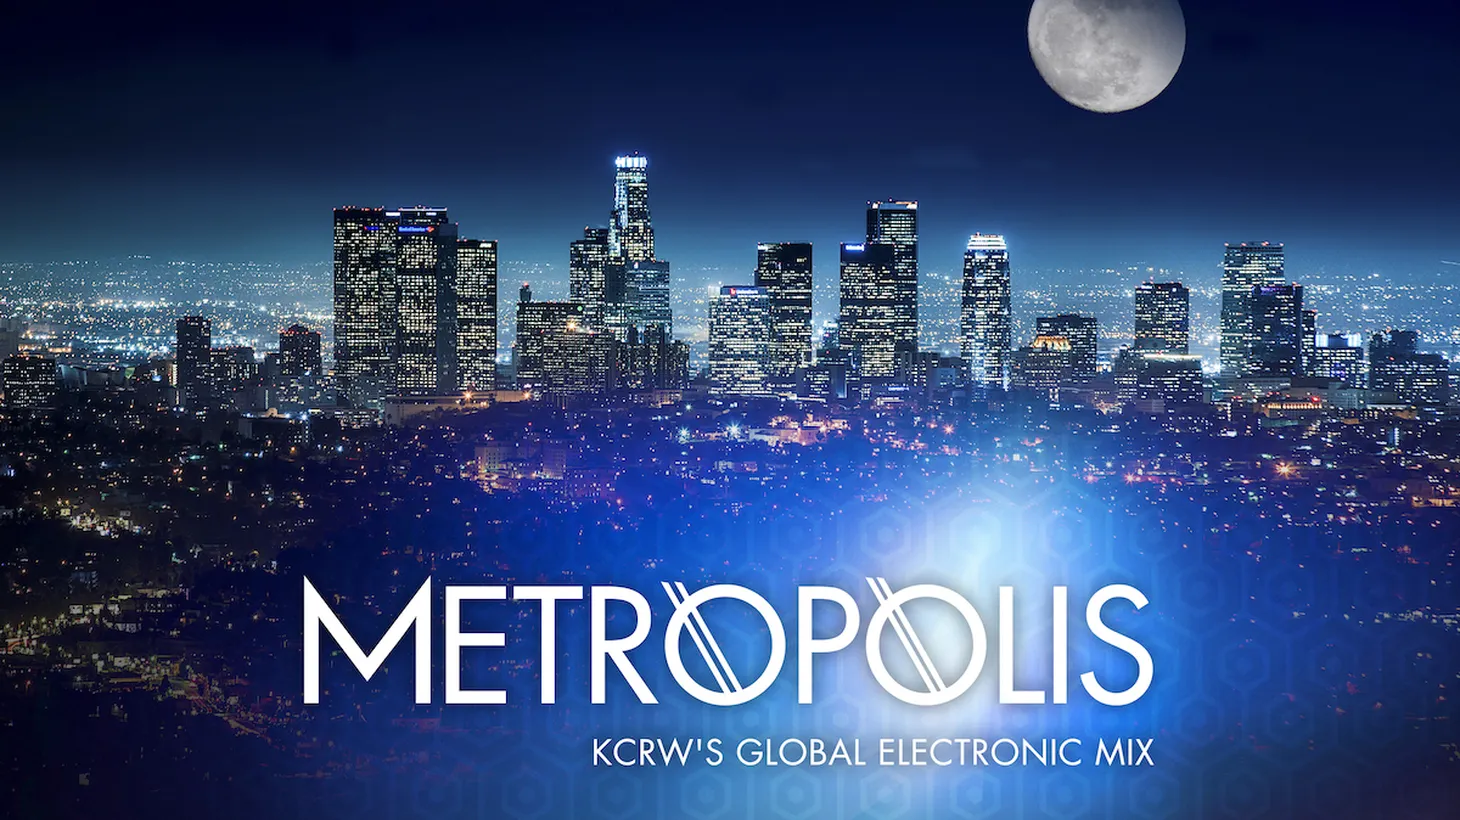 Metropolis playlist, September 3, 2022.